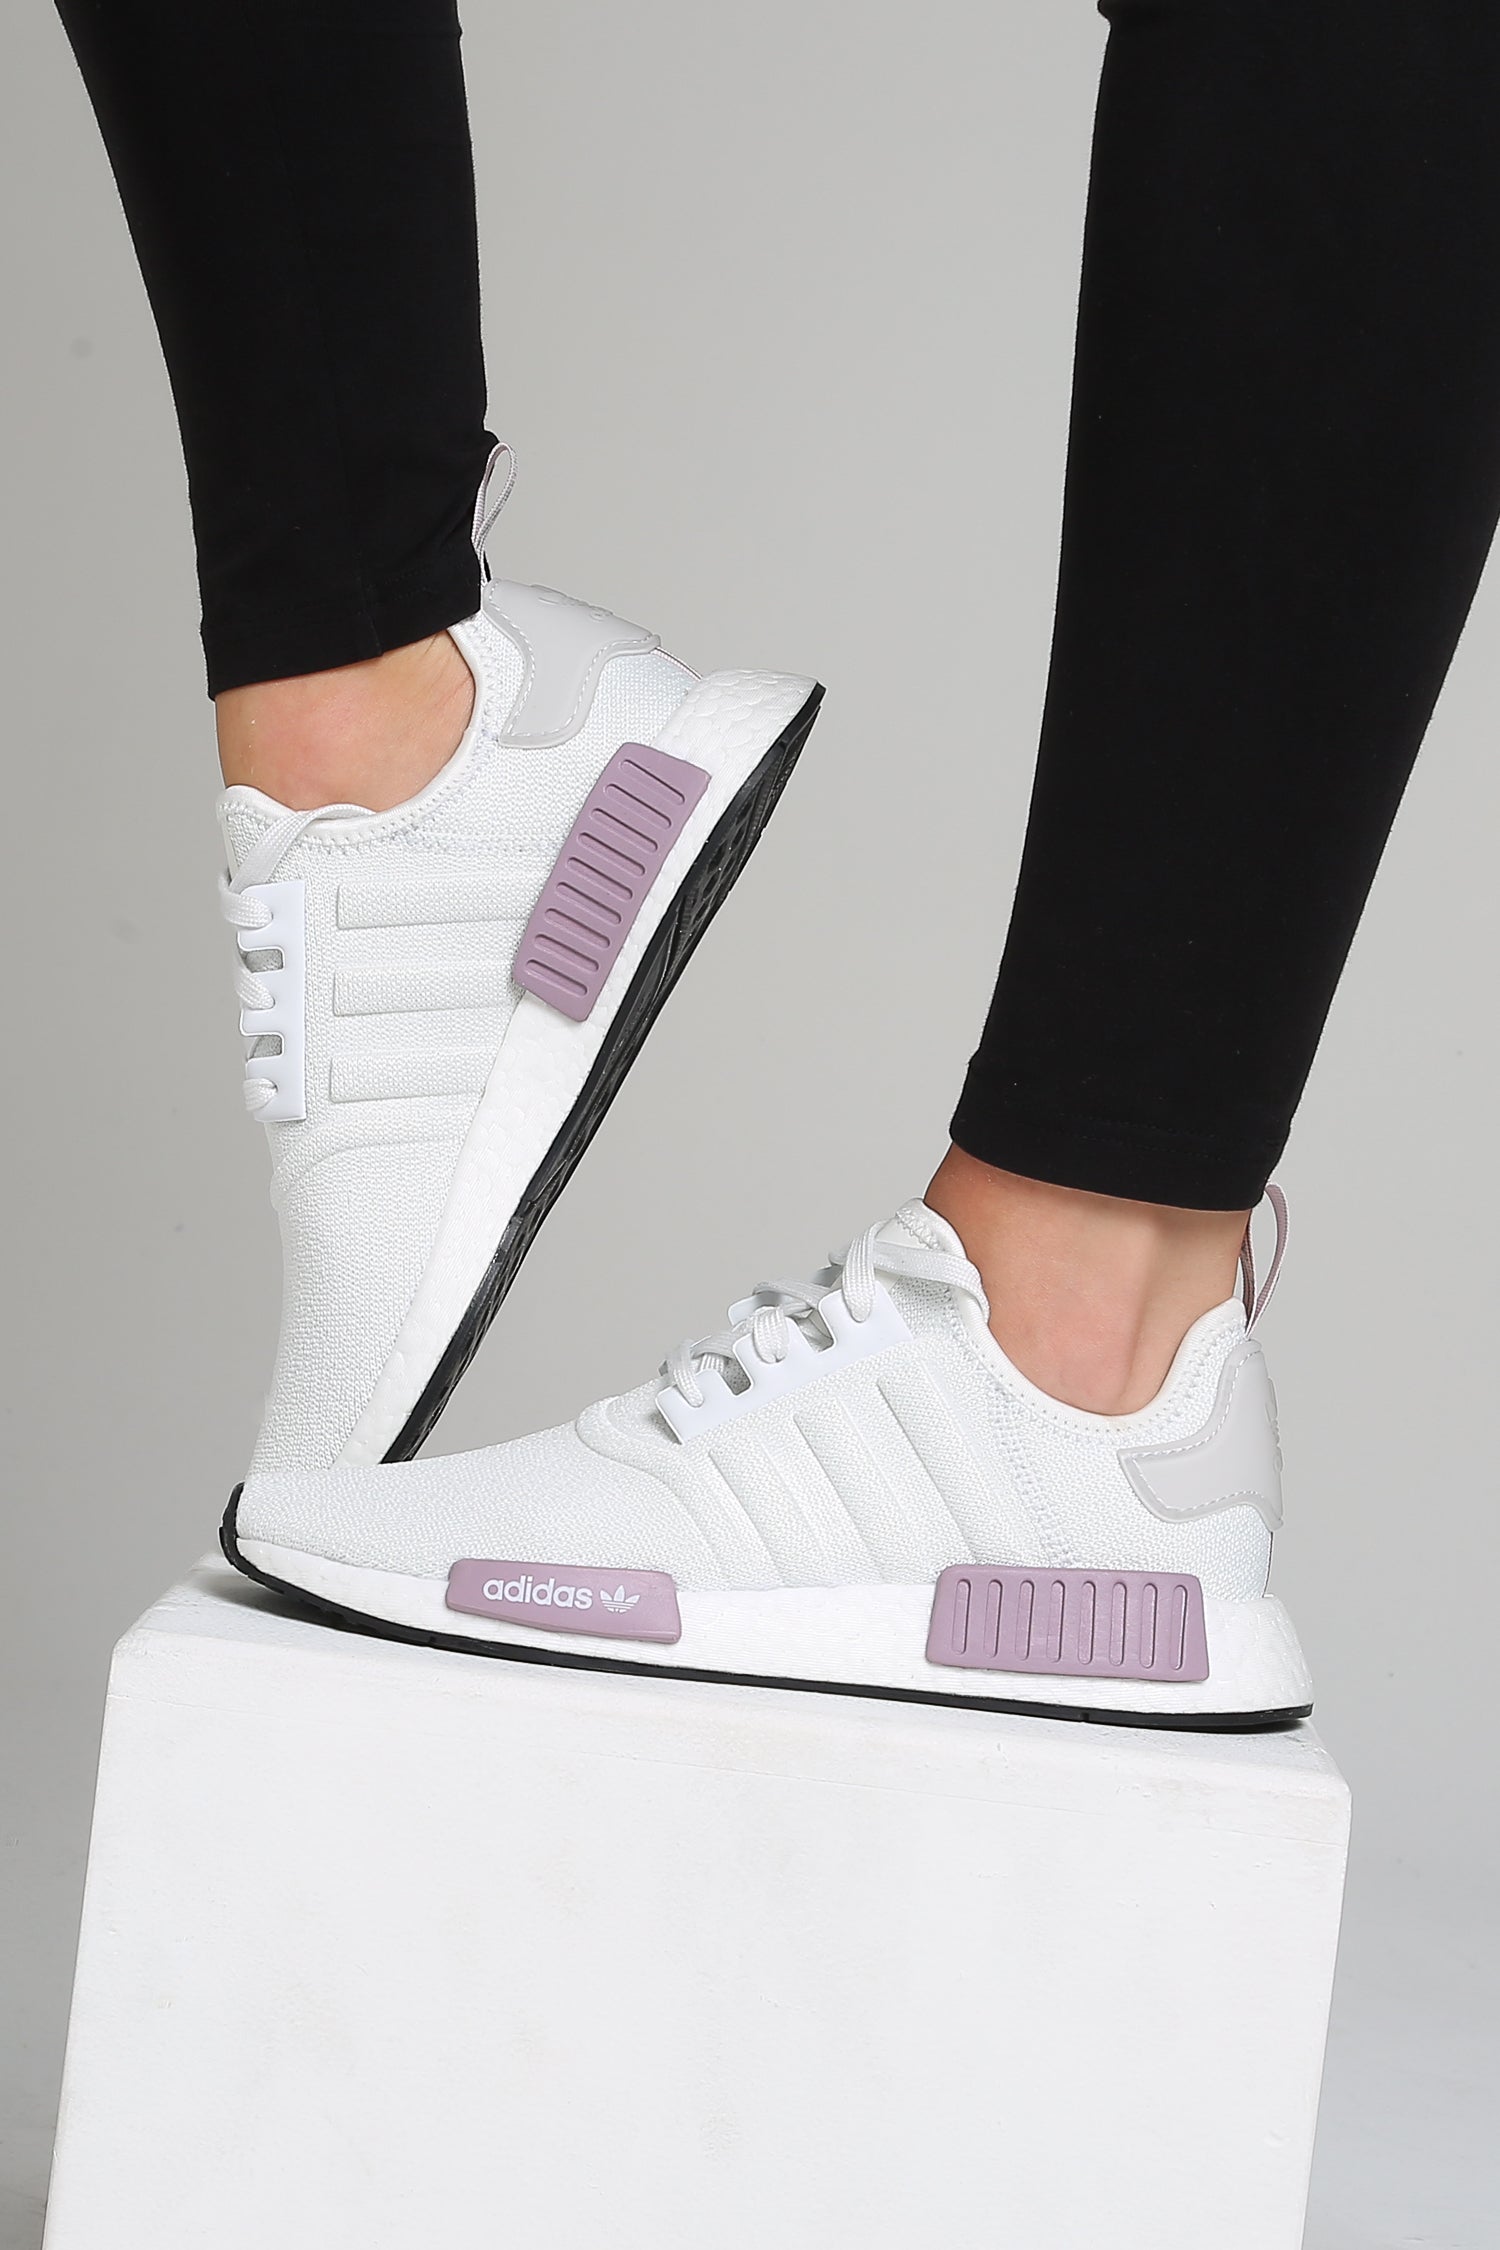 adidas nmd r1 womens white and purple